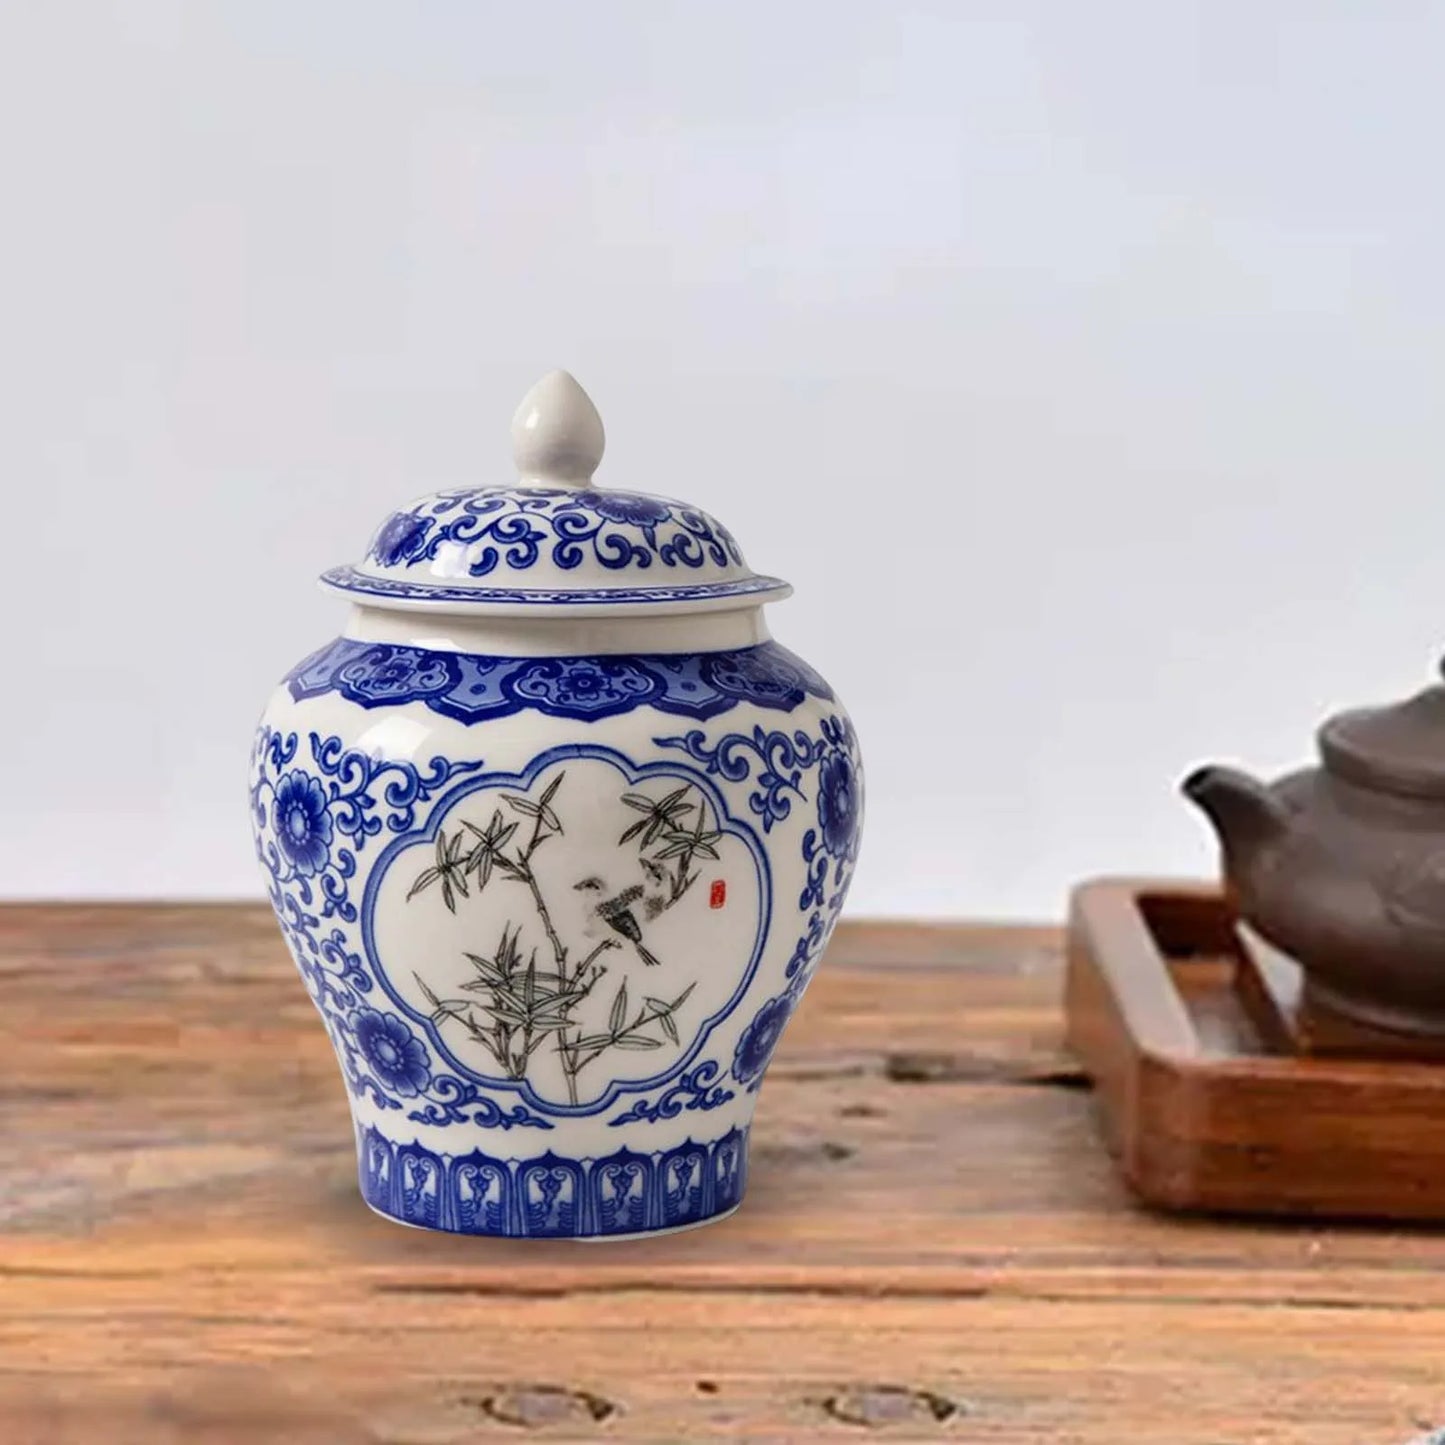 Chinese Ceramic Ginger Jar Decorative Flower Vase with Lid Blue and White Porcelain Jar for Restaurant Decor Ornament